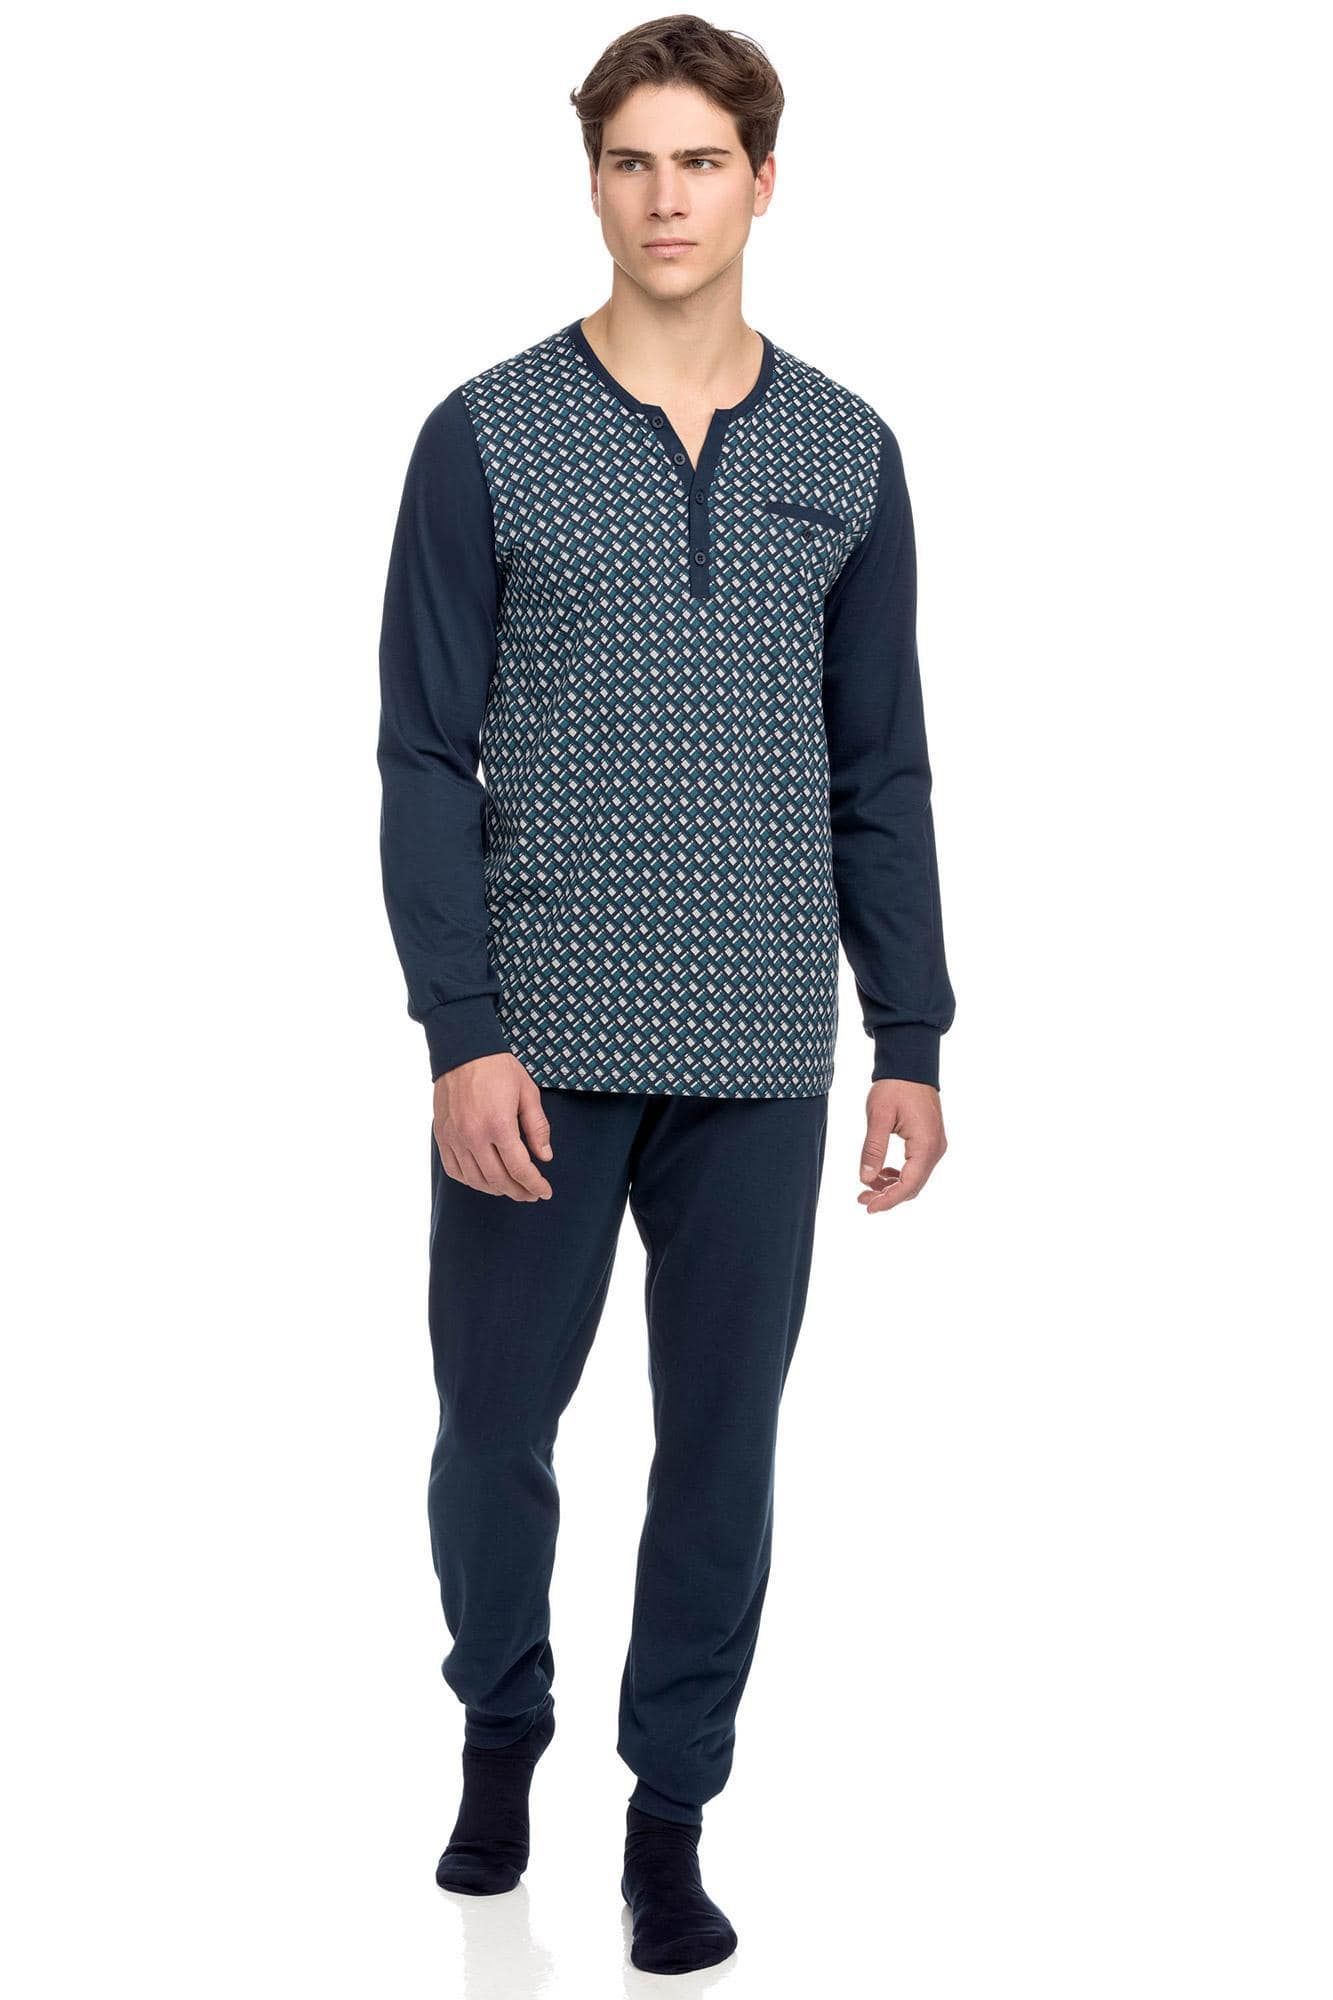 Men’s Pyjamas with button placket